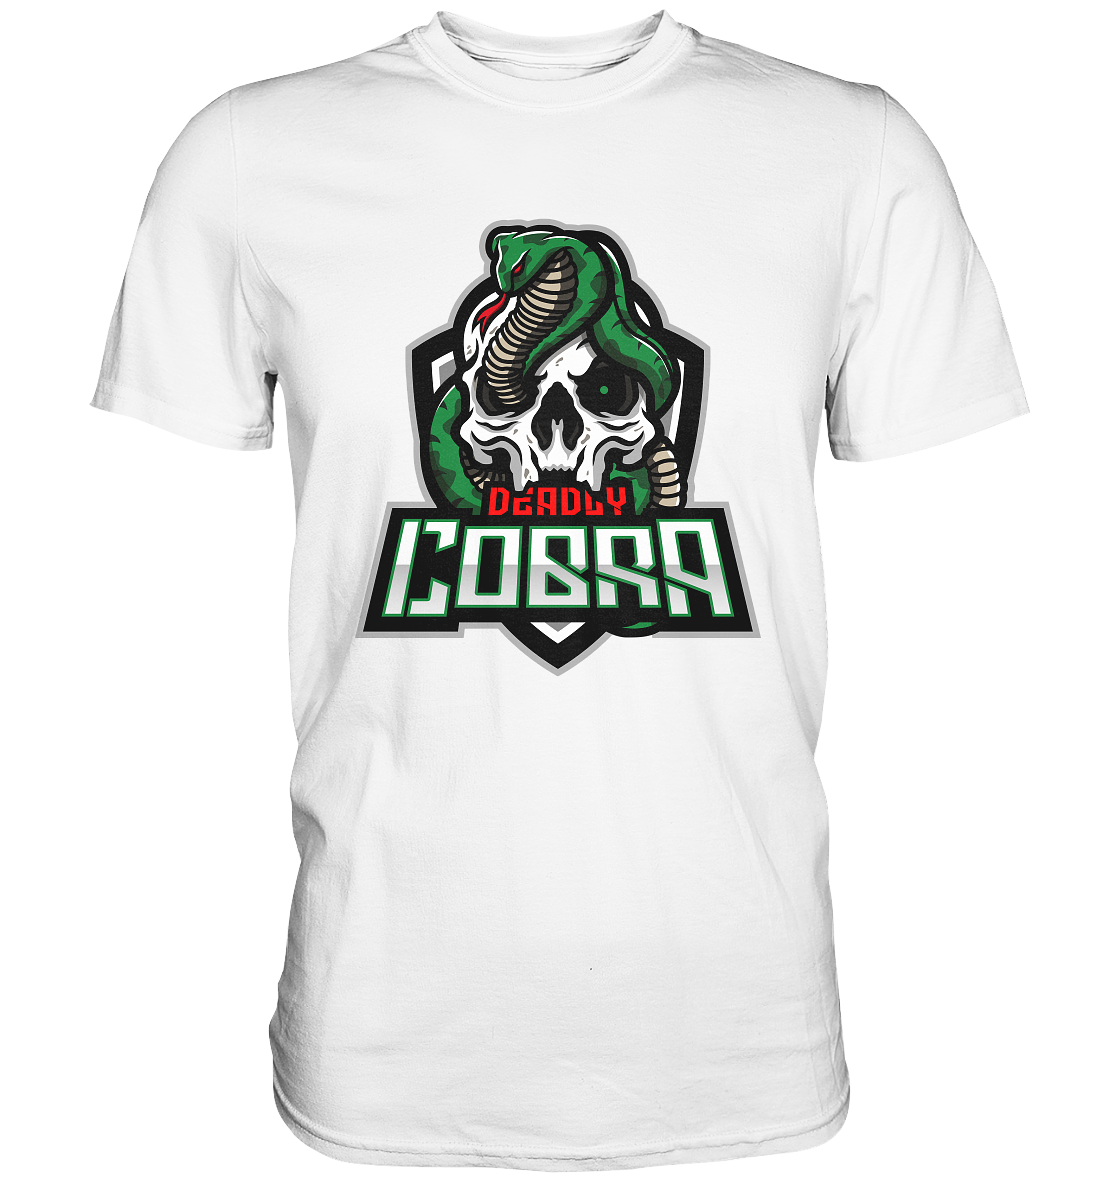 DEADLY COBRA - Basic Shirt